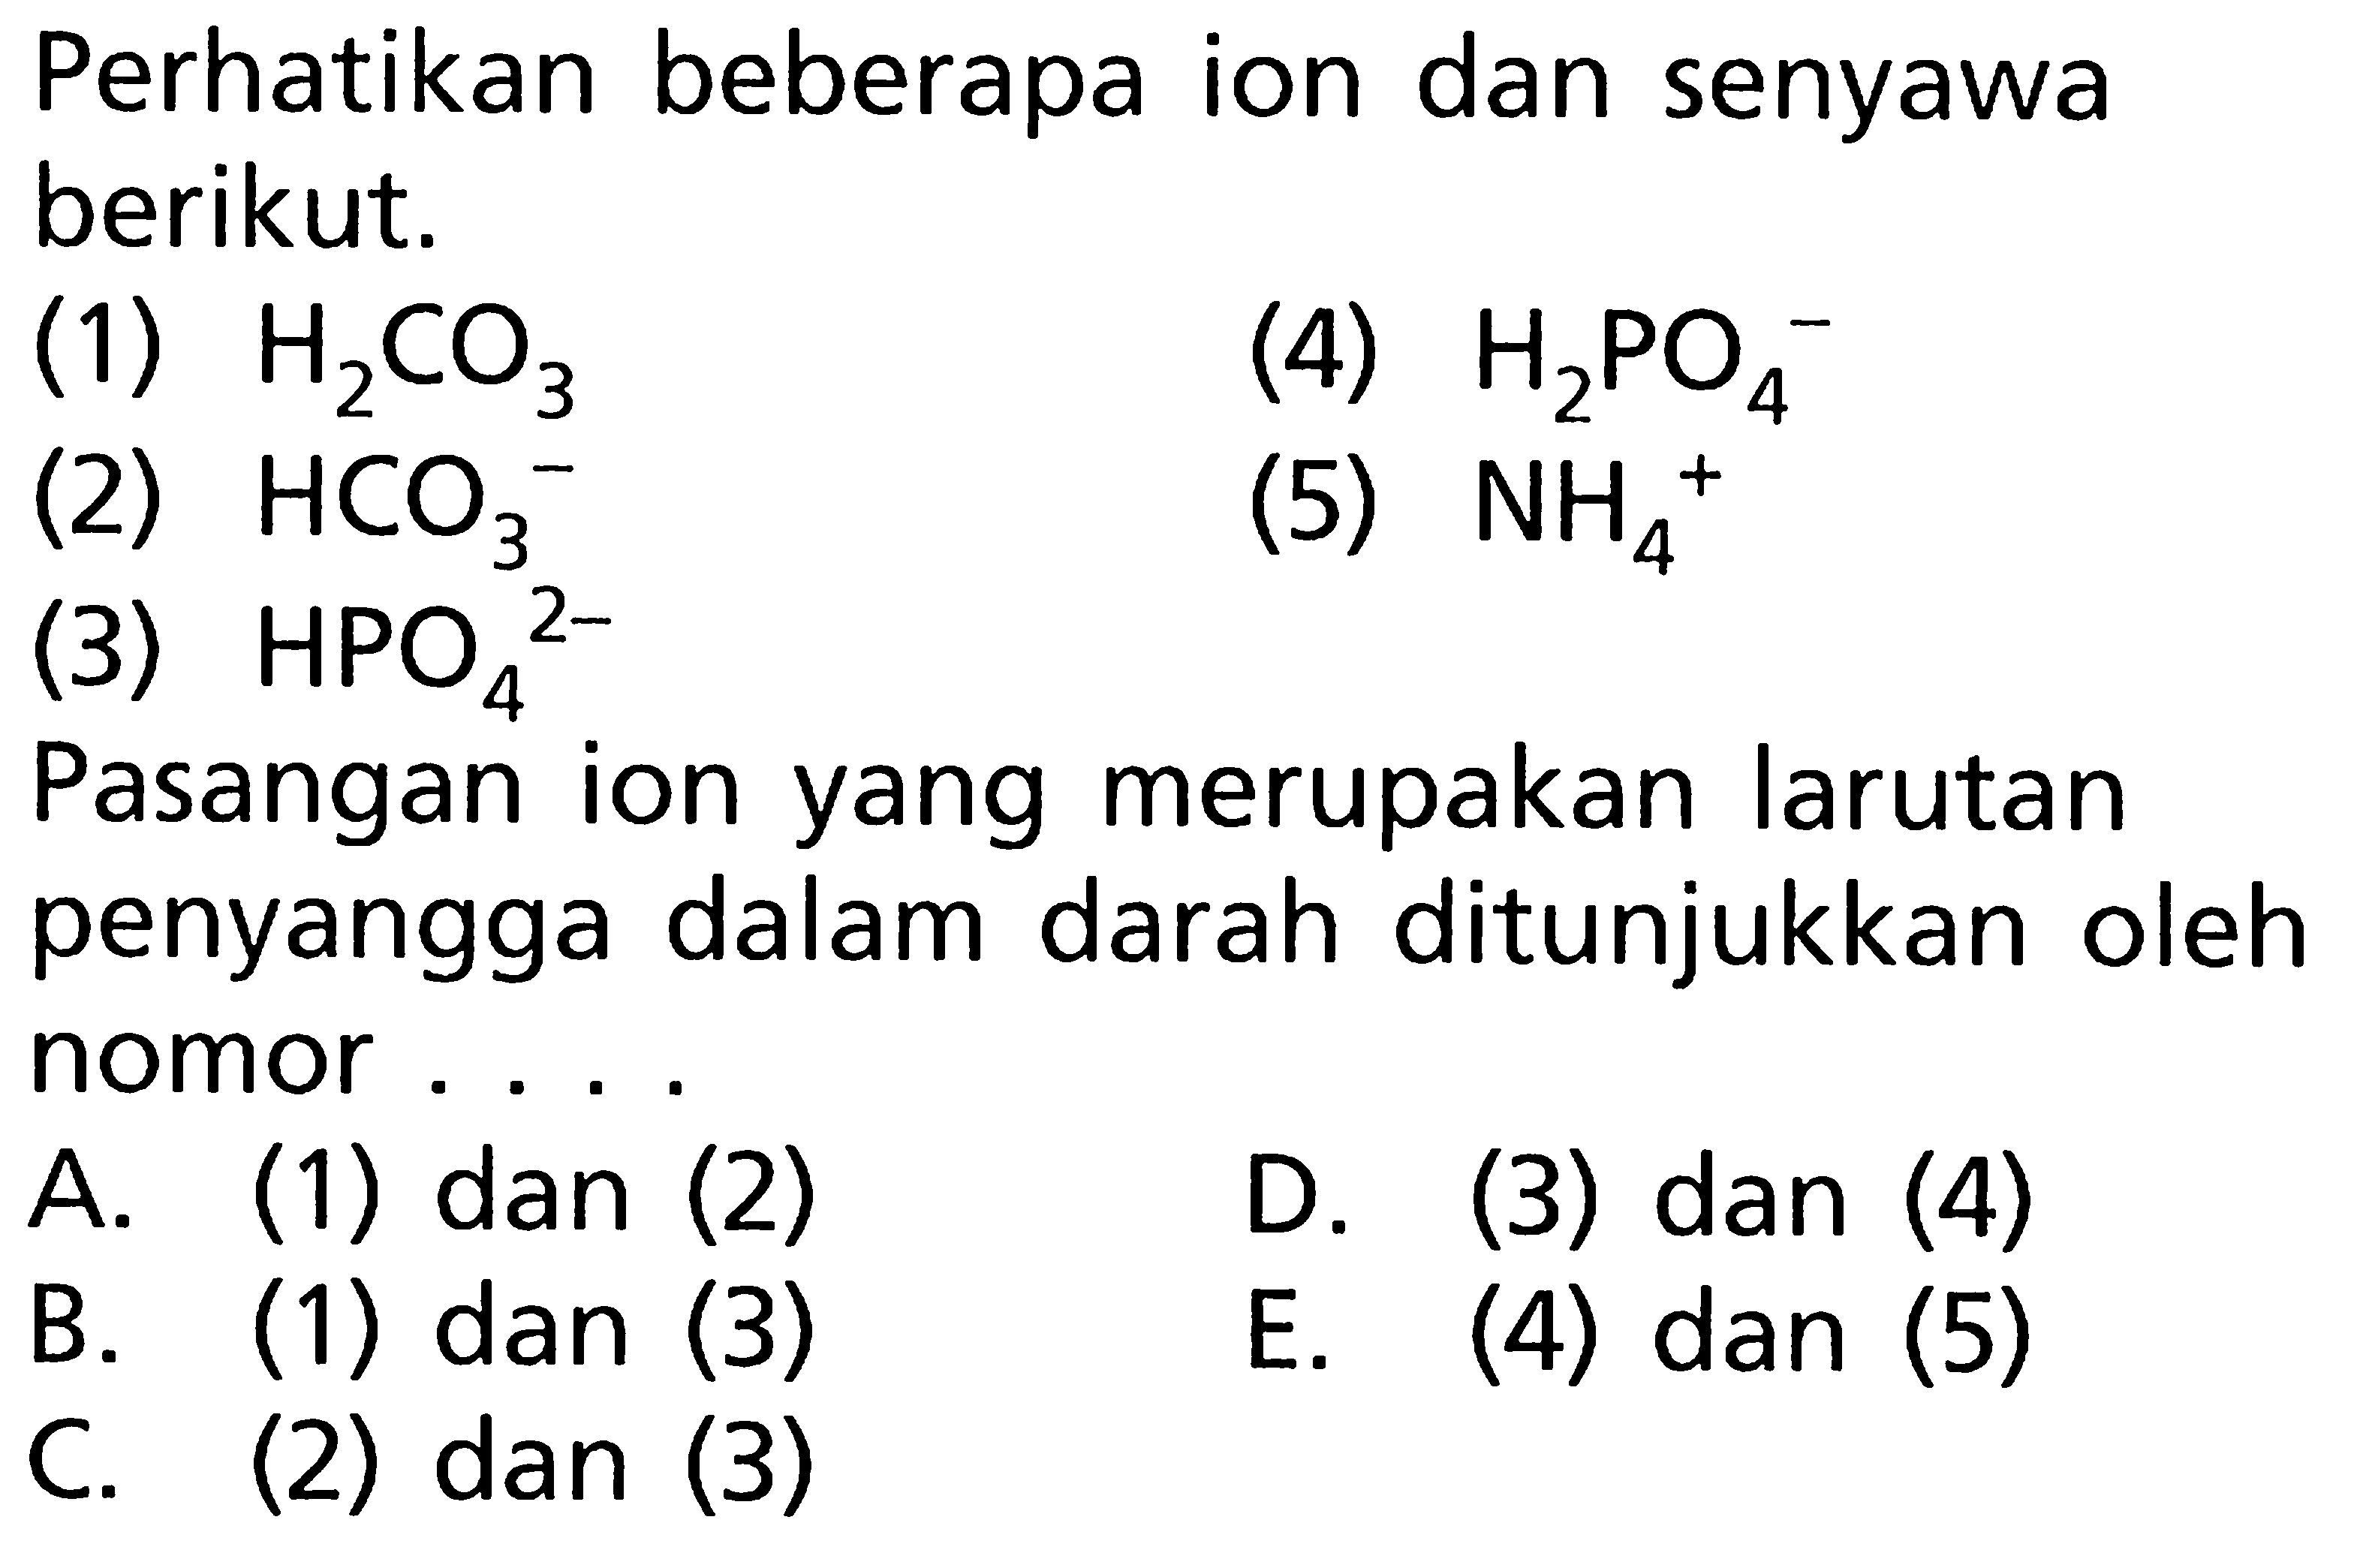 Perhatikan beberapa ion dan senyawa berikut. (1) H2CO3 (2) HCO3^- (3) HPO4^2- (4) H2PO4^- (5) NH4^+ Pasangan ion yang merupakan larutan penyangga dalam darah ditunjukkan oleh nomor.... A. (1) dan (2) B. (1) dan (3) C. (2) dan (3) D. (3) dan (4) E. (4) dan (5)